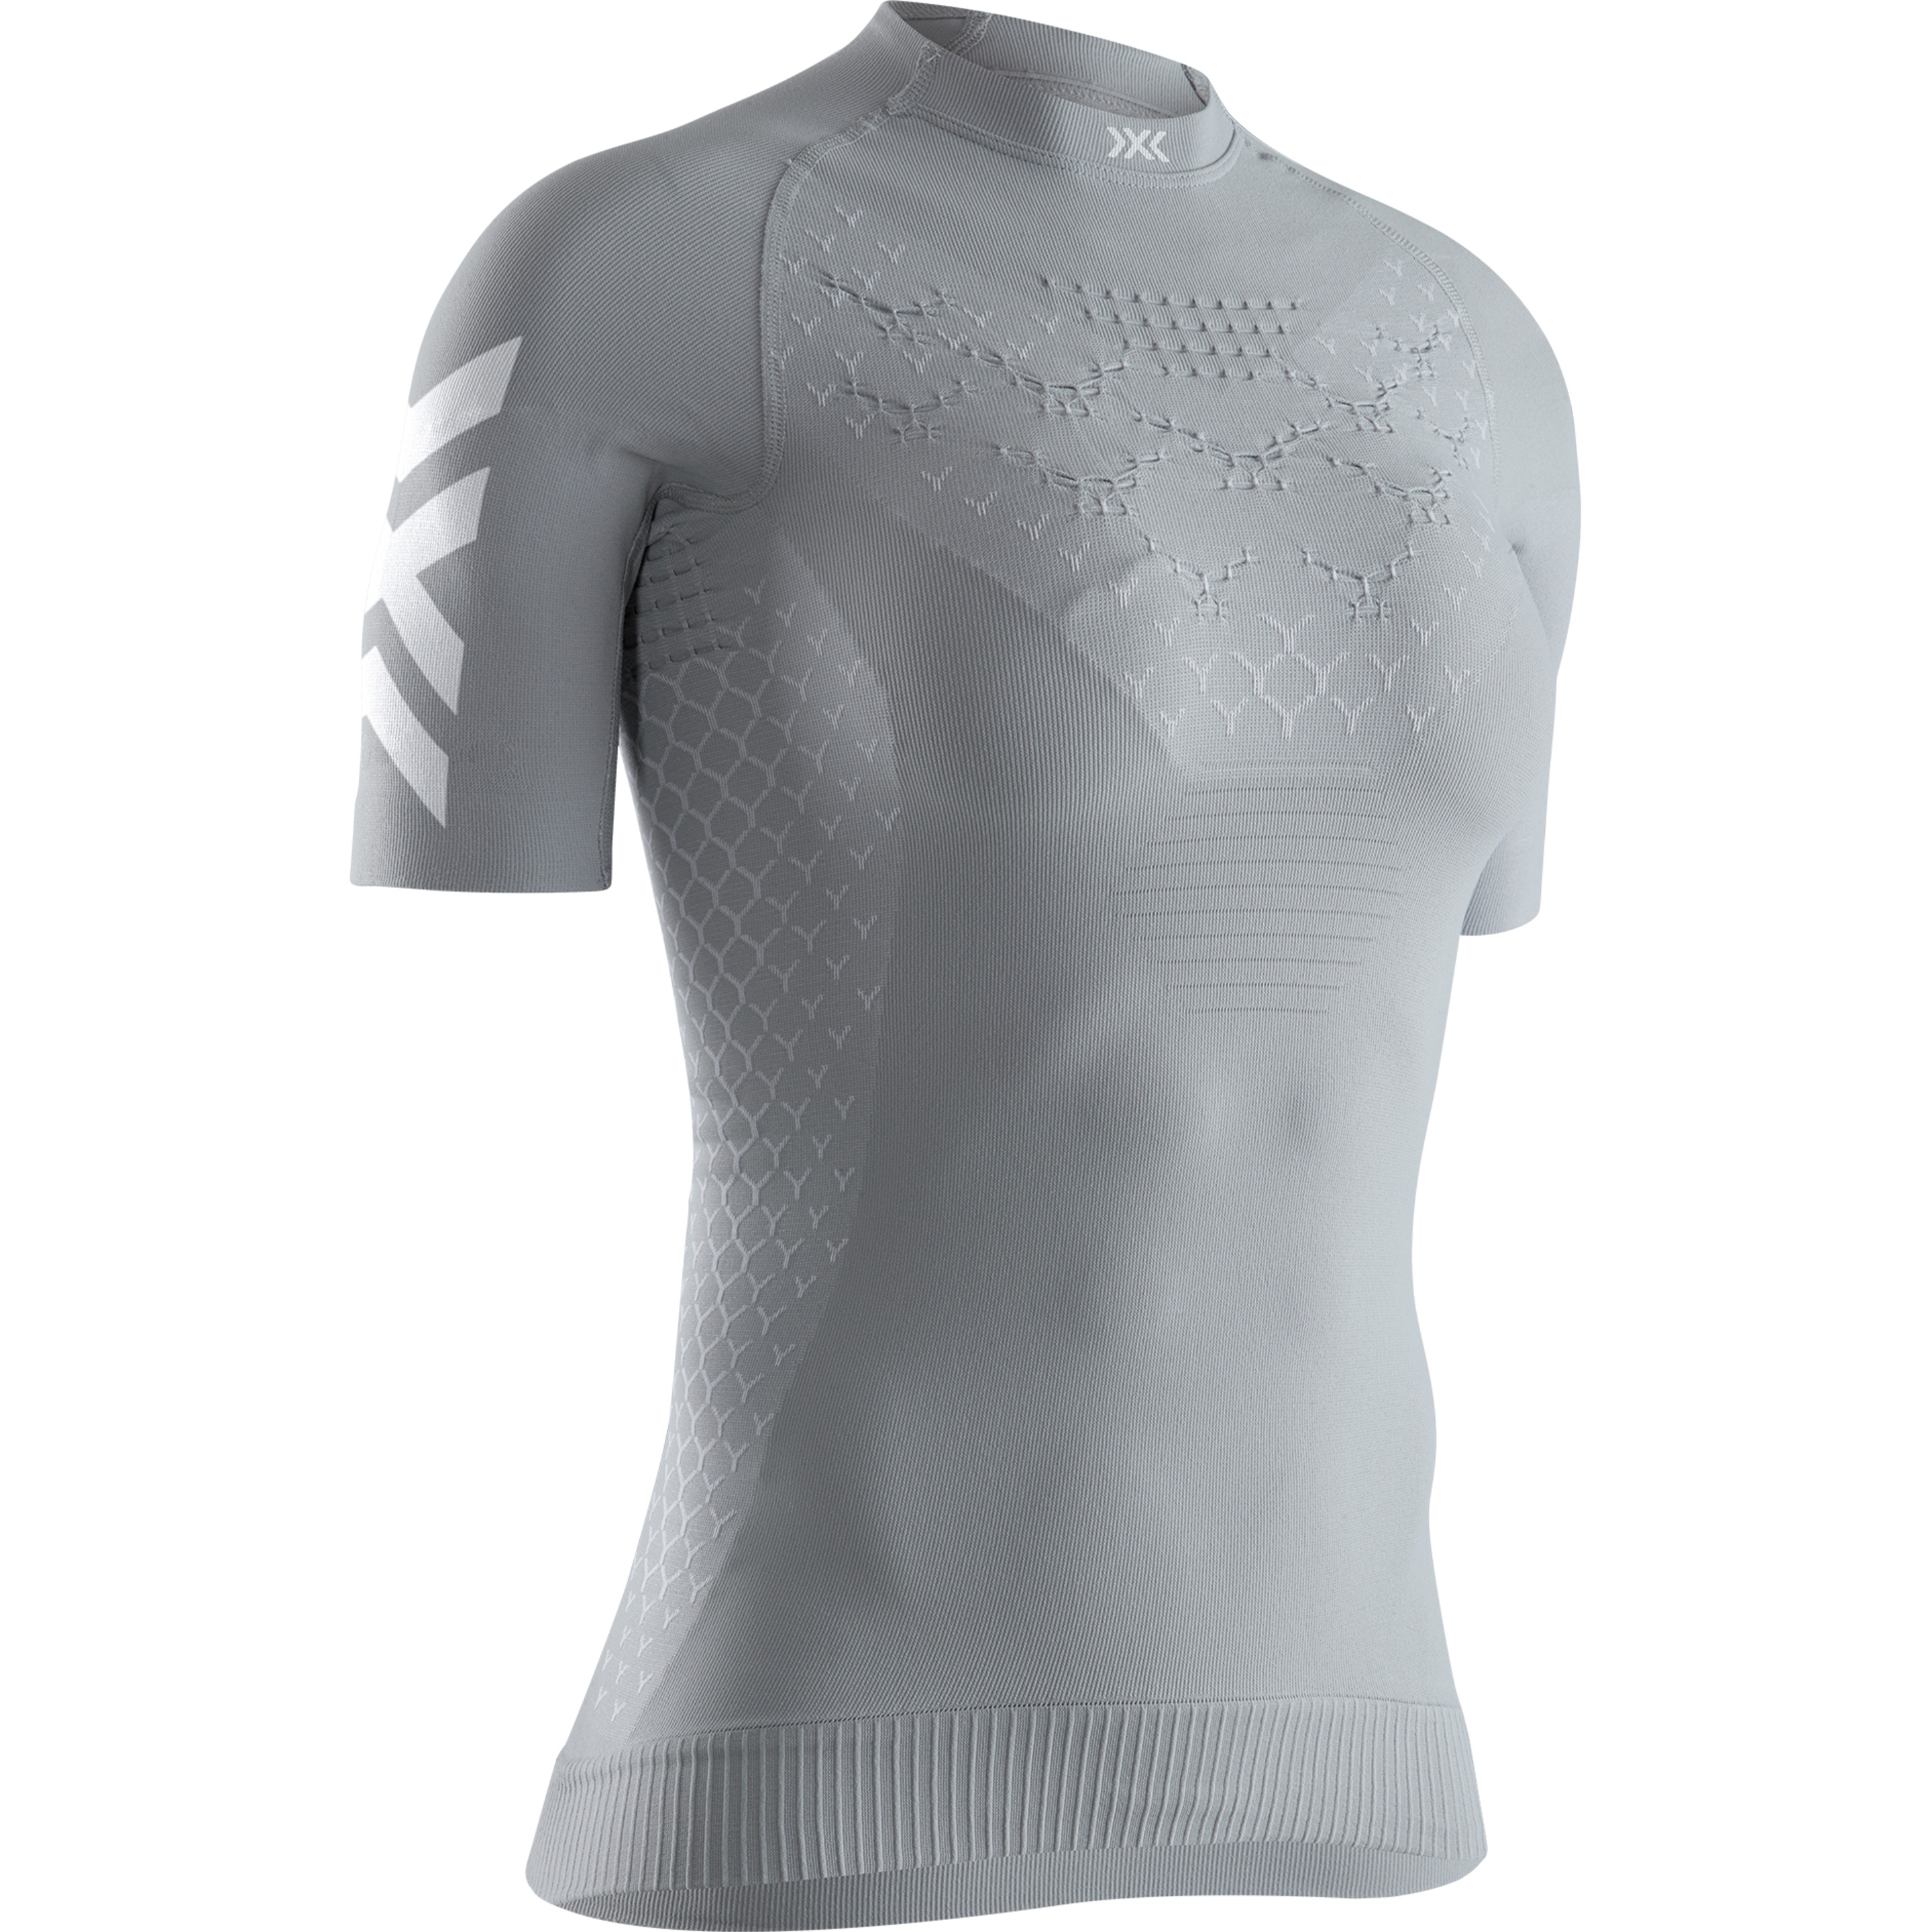 Camiseta M/c Twyce G2 Run Mulheres X-bionic - gris - 